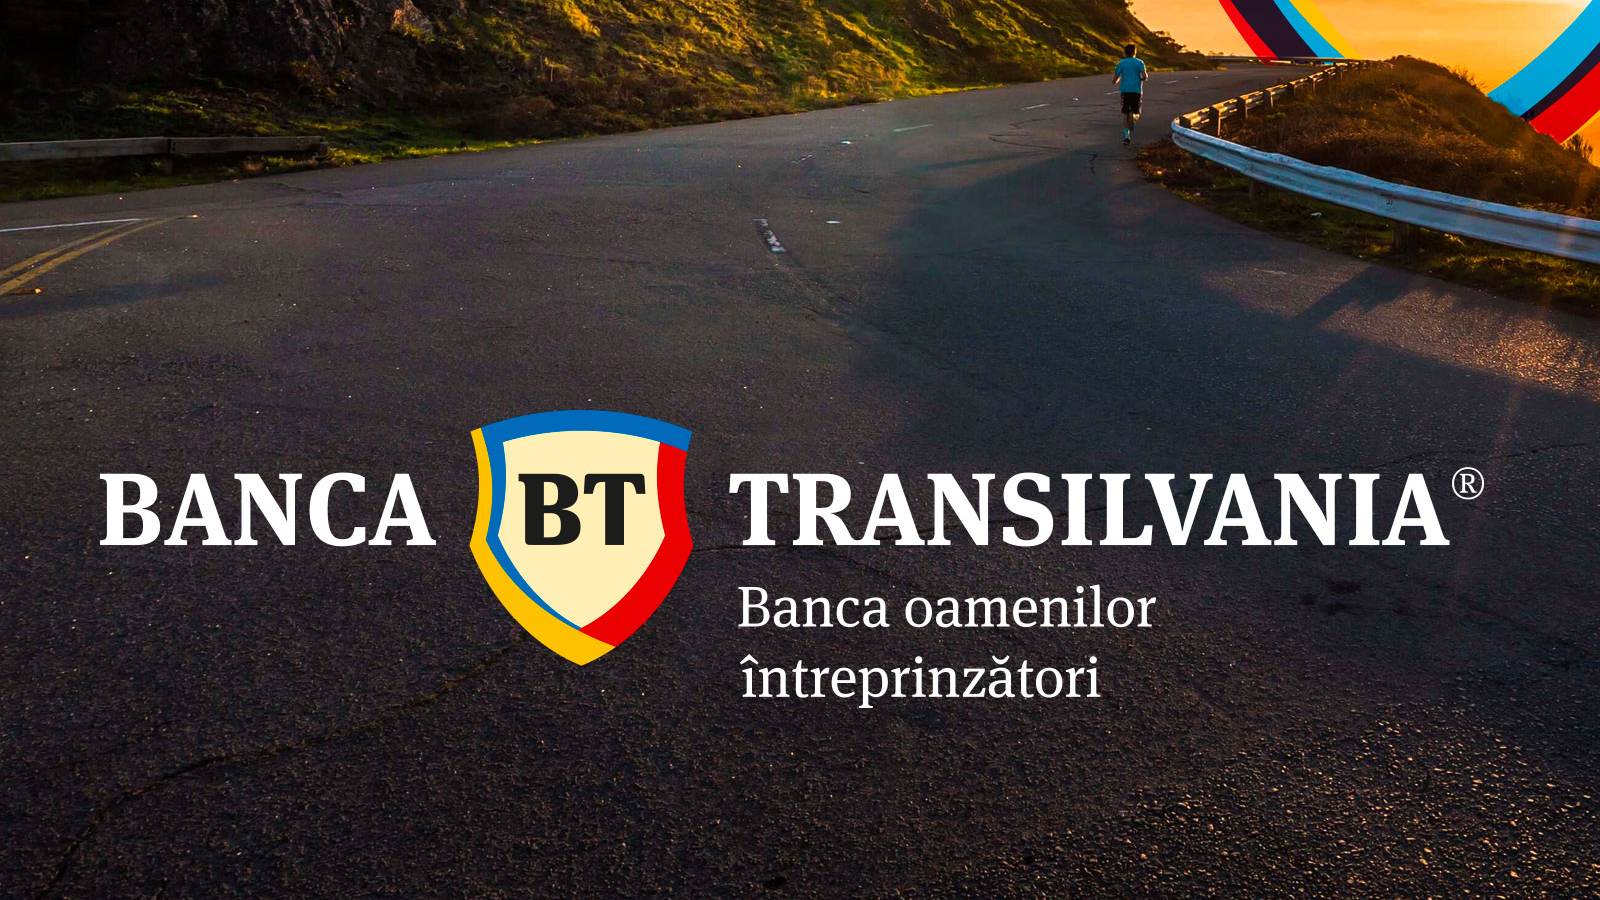 BANCA Transilvania movement